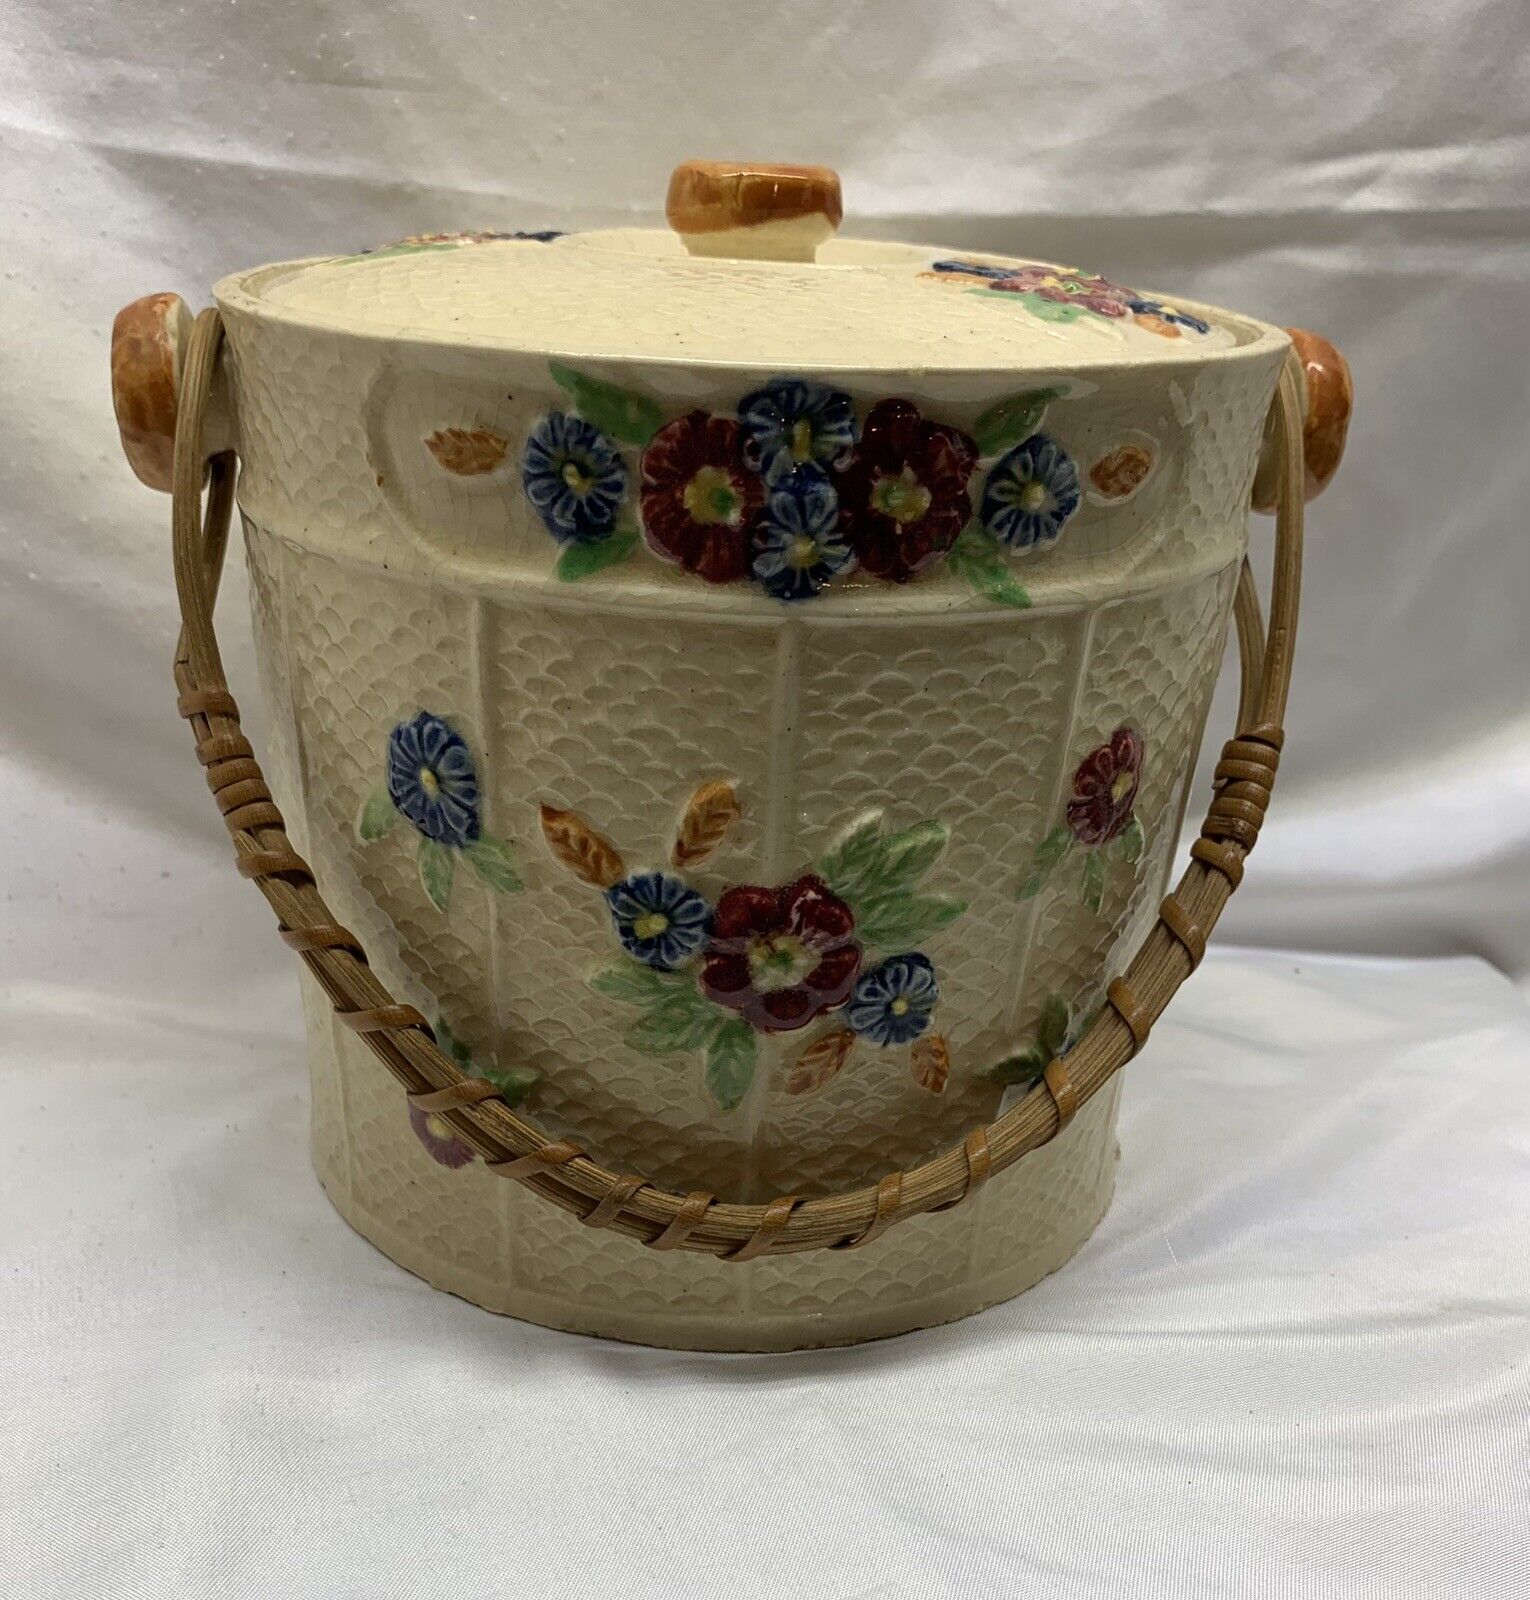 Vintage Japanese Floral Biscuit Jar With Wicker Handle - Made in Japan 4”